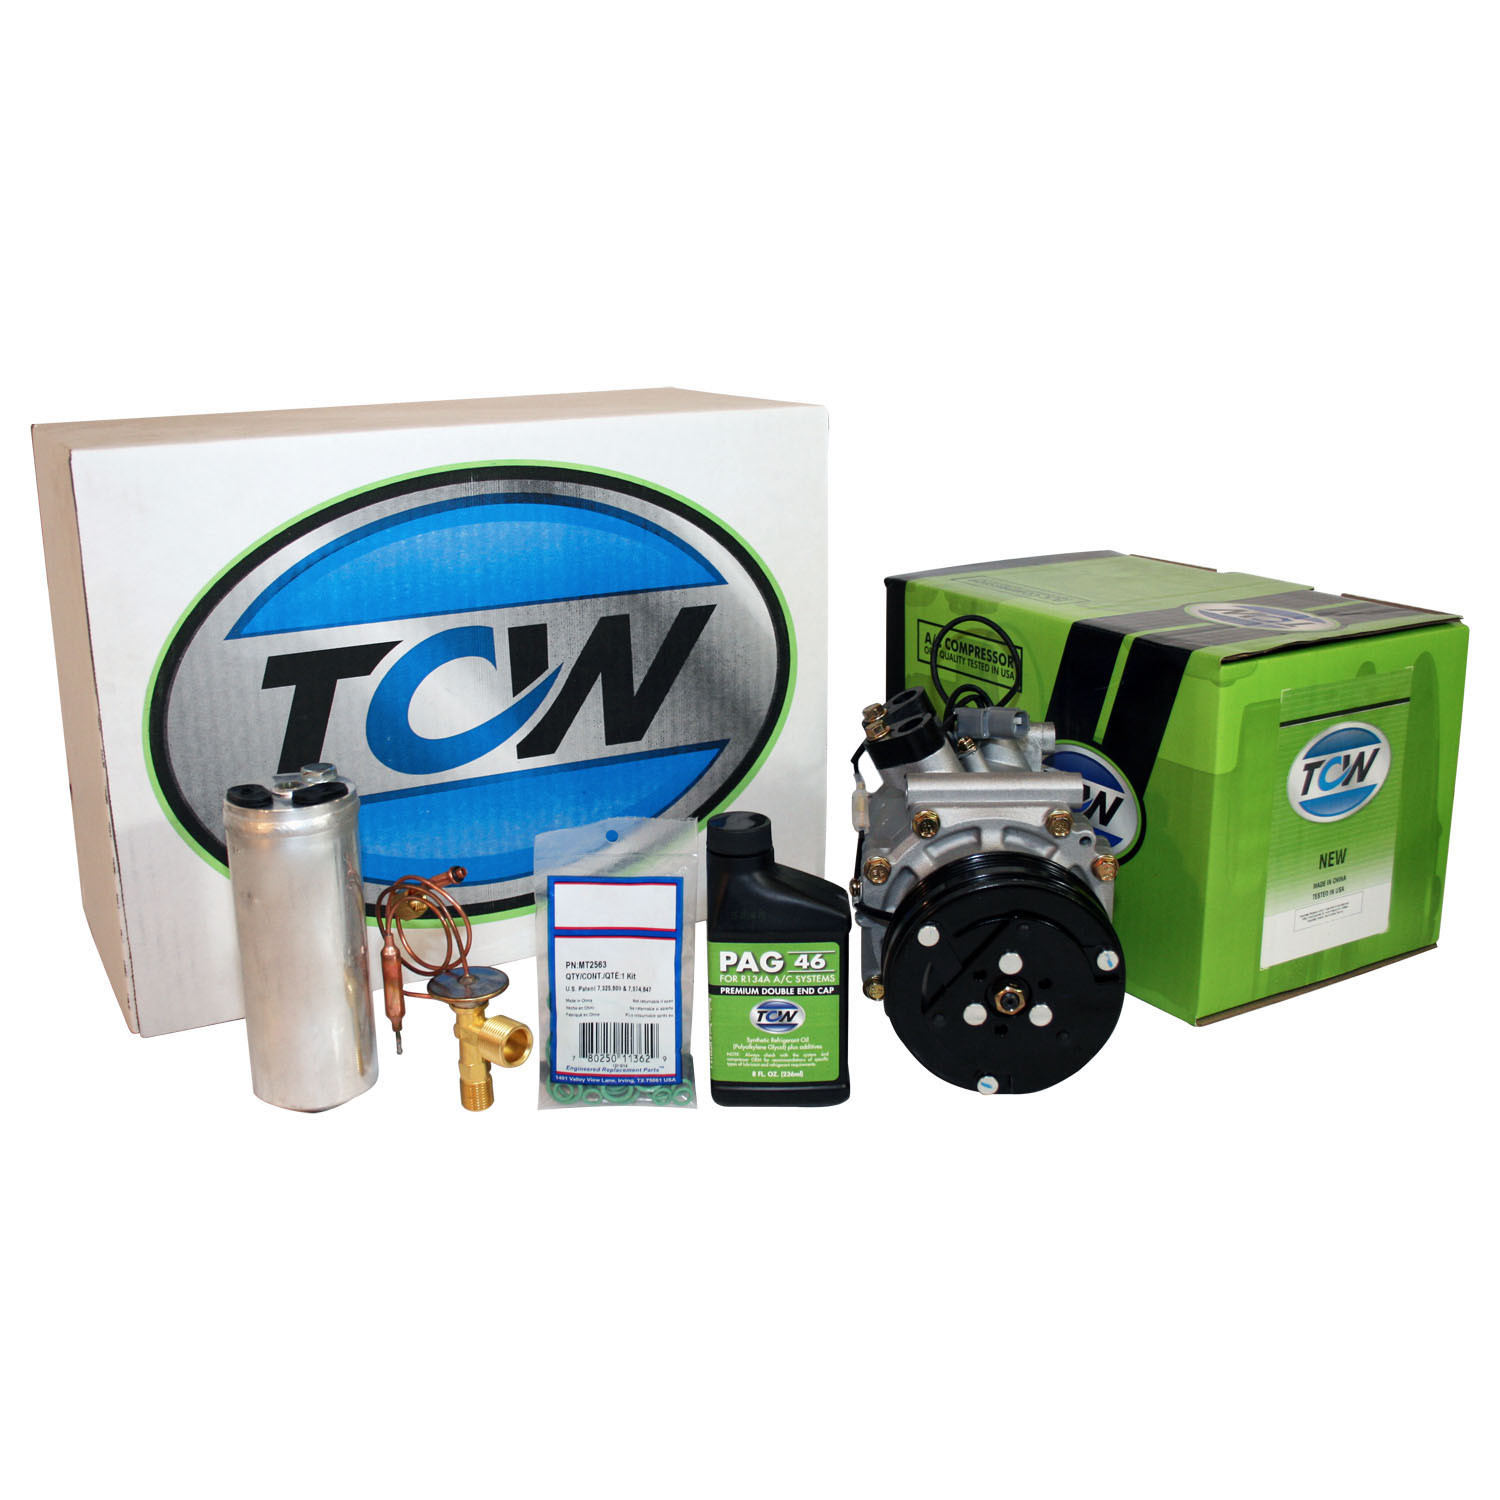 TCW Vehicle A/C Kit K1000308N New Product Image field_60b6a13a6e67c